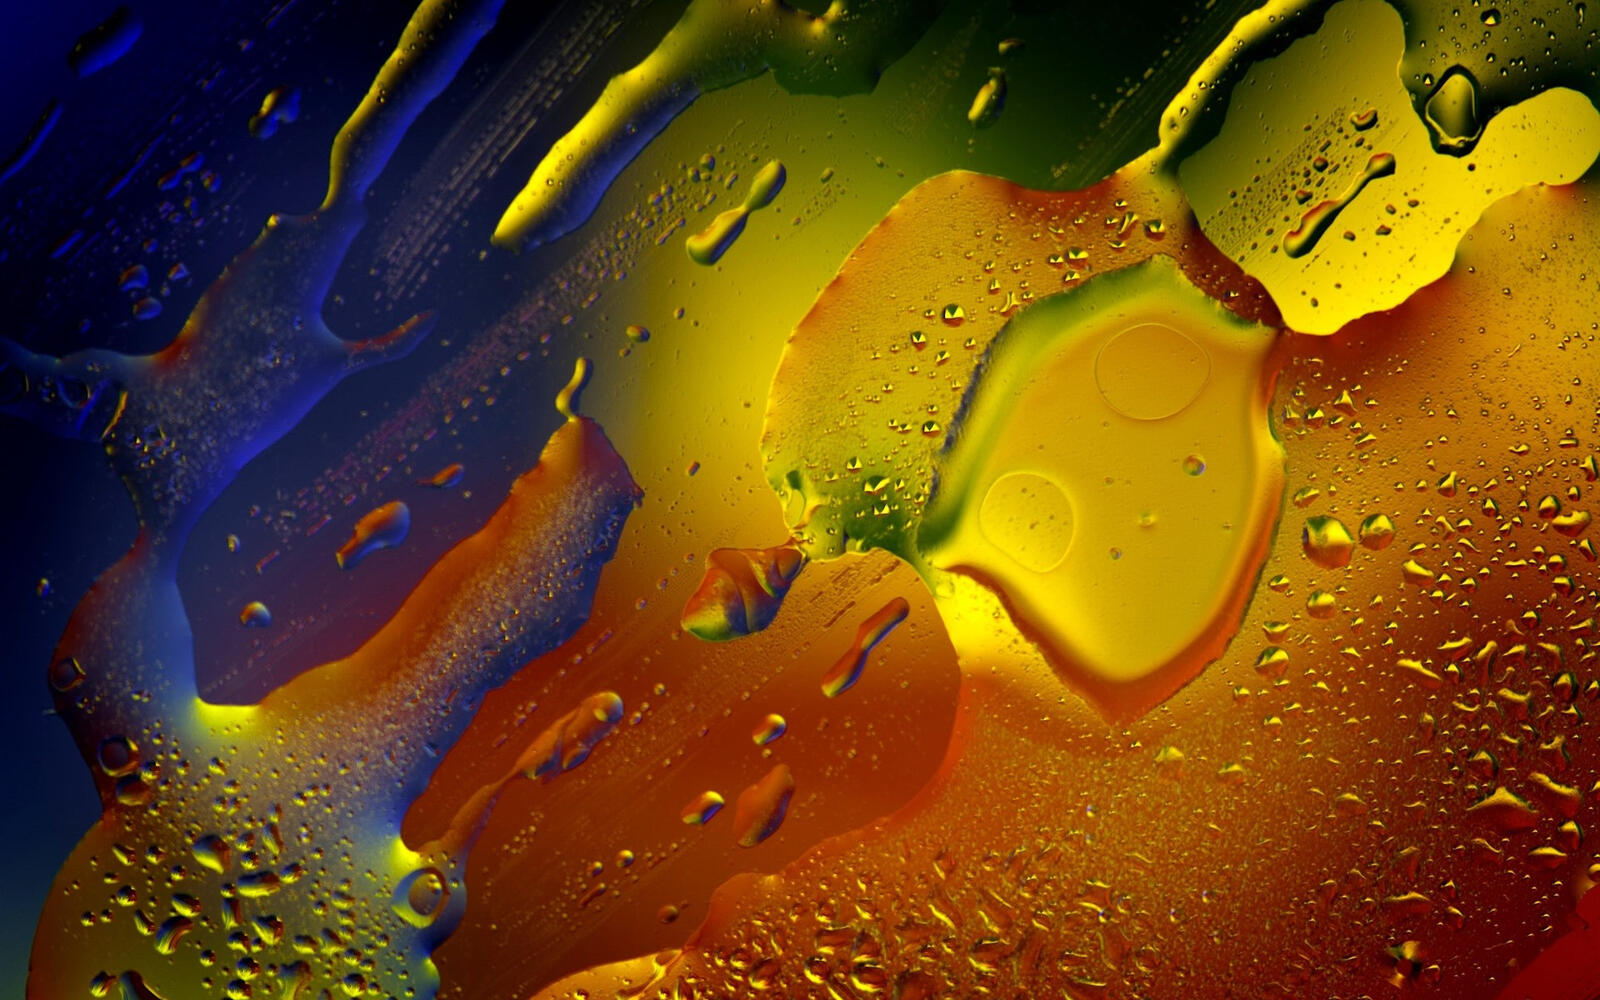 Wallpapers wallpaper water drops liquid glass on the desktop